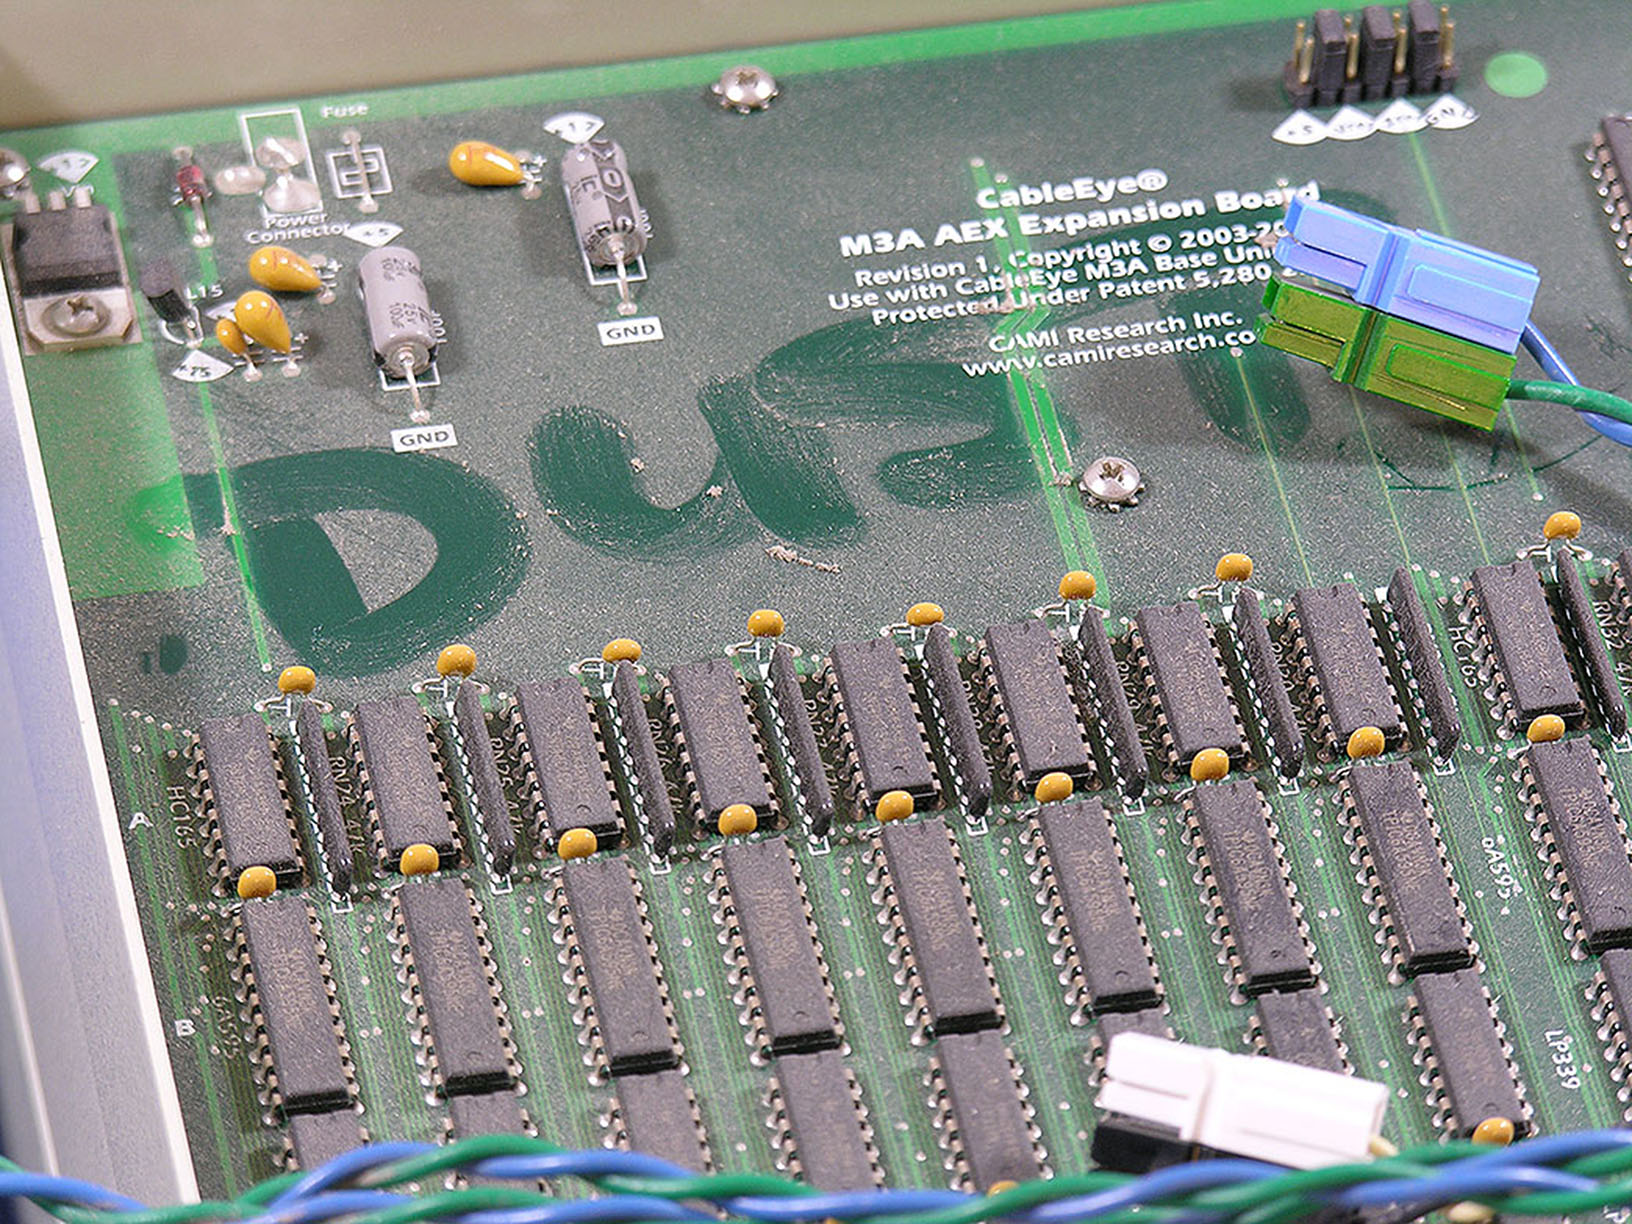 Dusty electronics